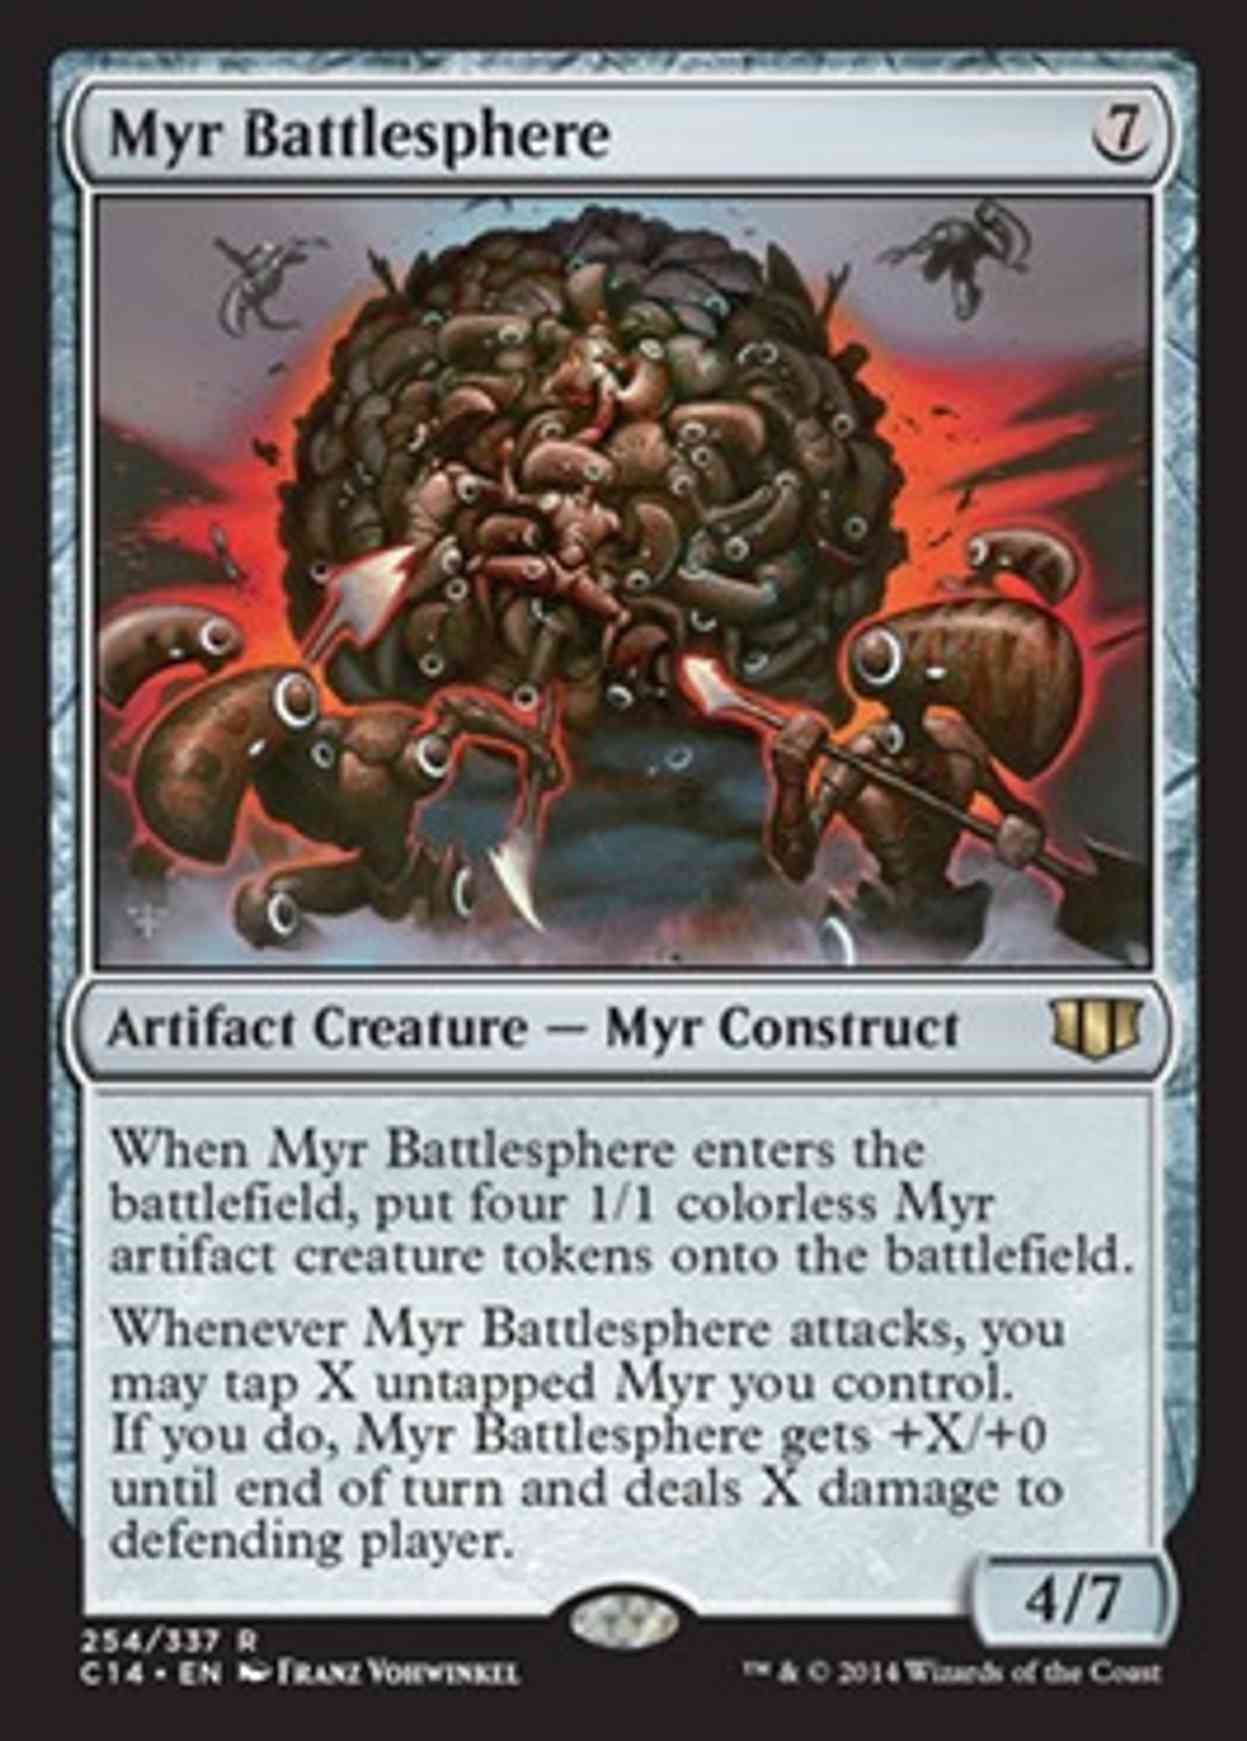 Myr Battlesphere magic card front